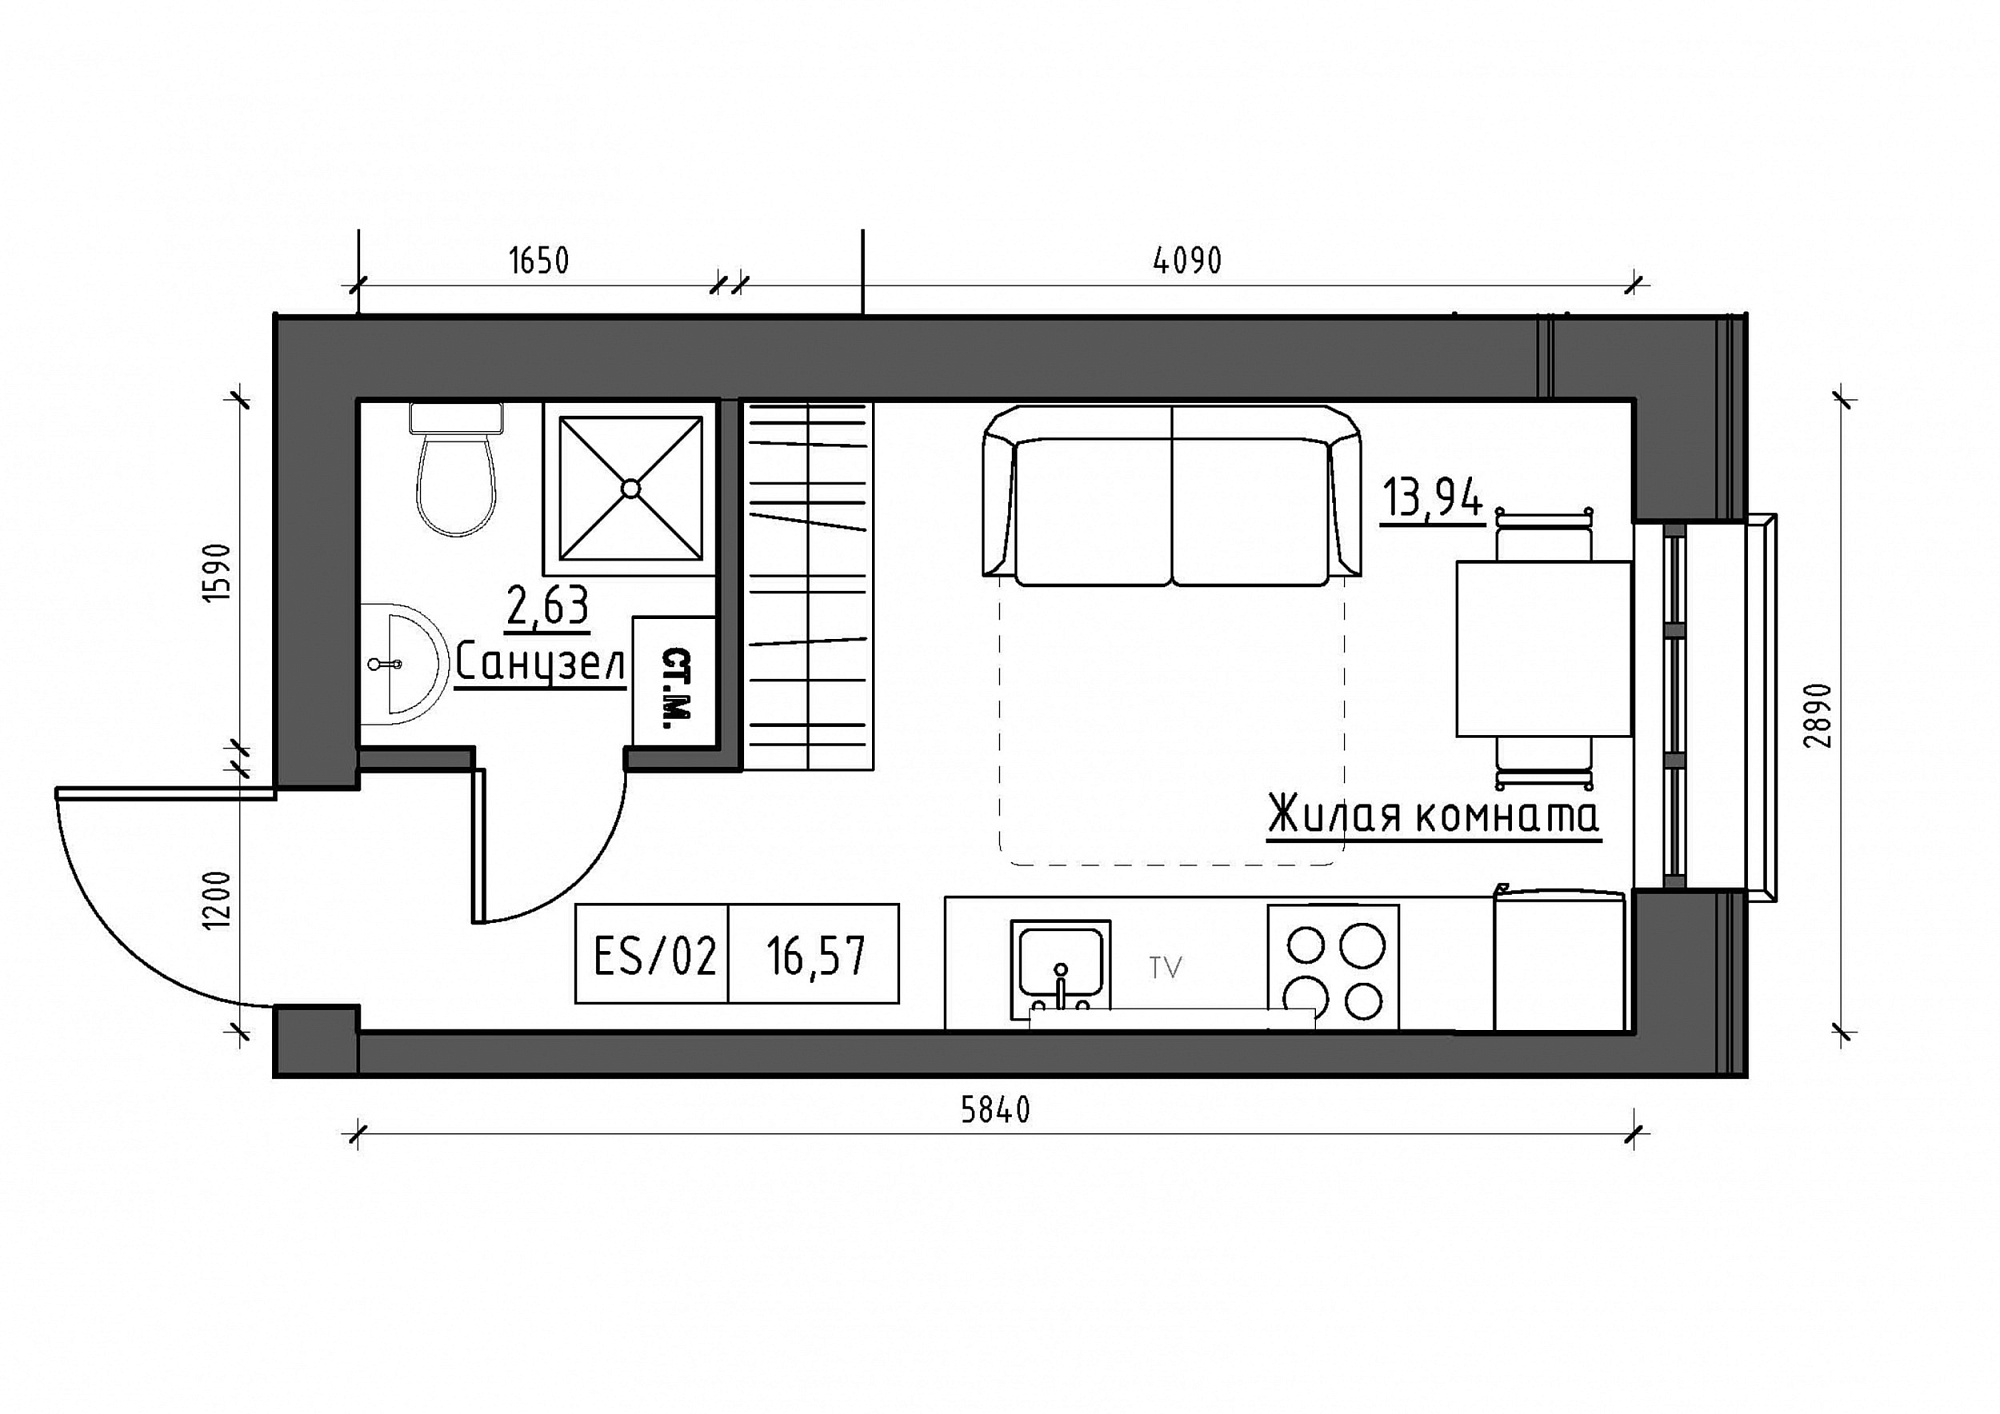 Planning Smart flats area 16.57m2, KS-011-03/0005.